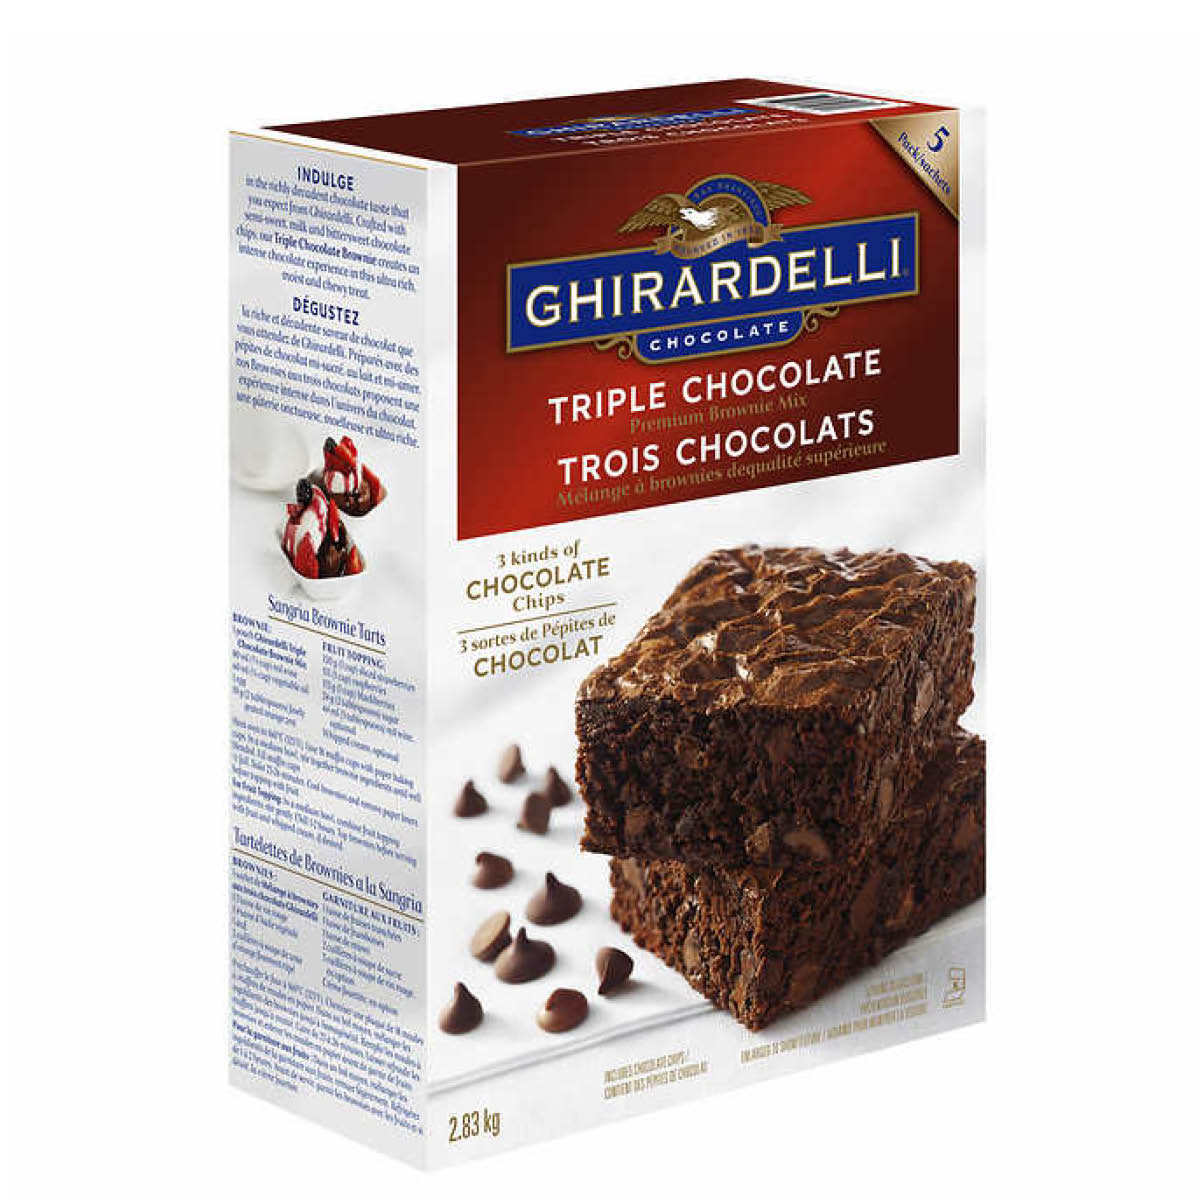 Ghirardelli Brownie Mix, 5pk, 2.83kg